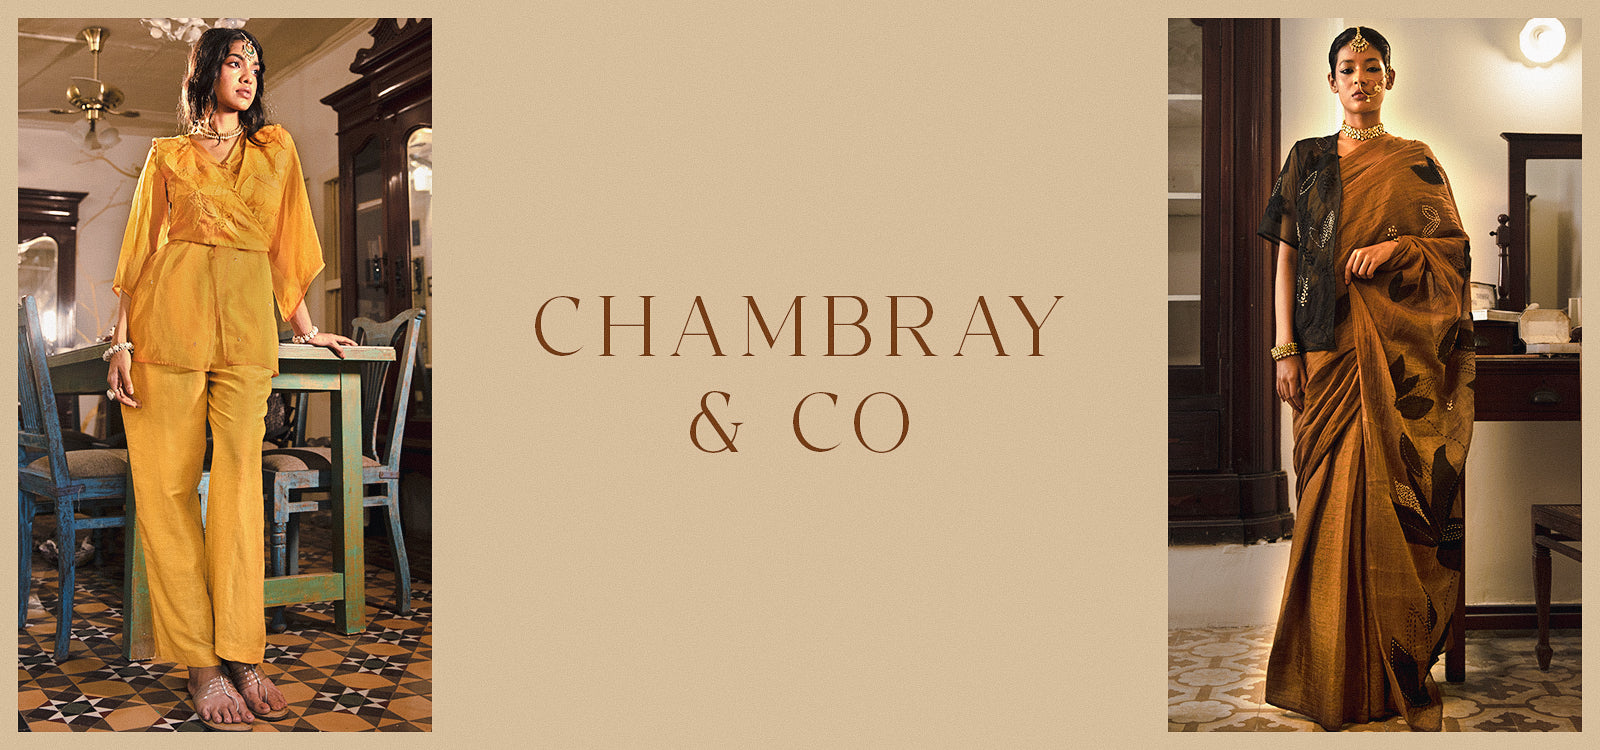 CHAMBRAY & CO